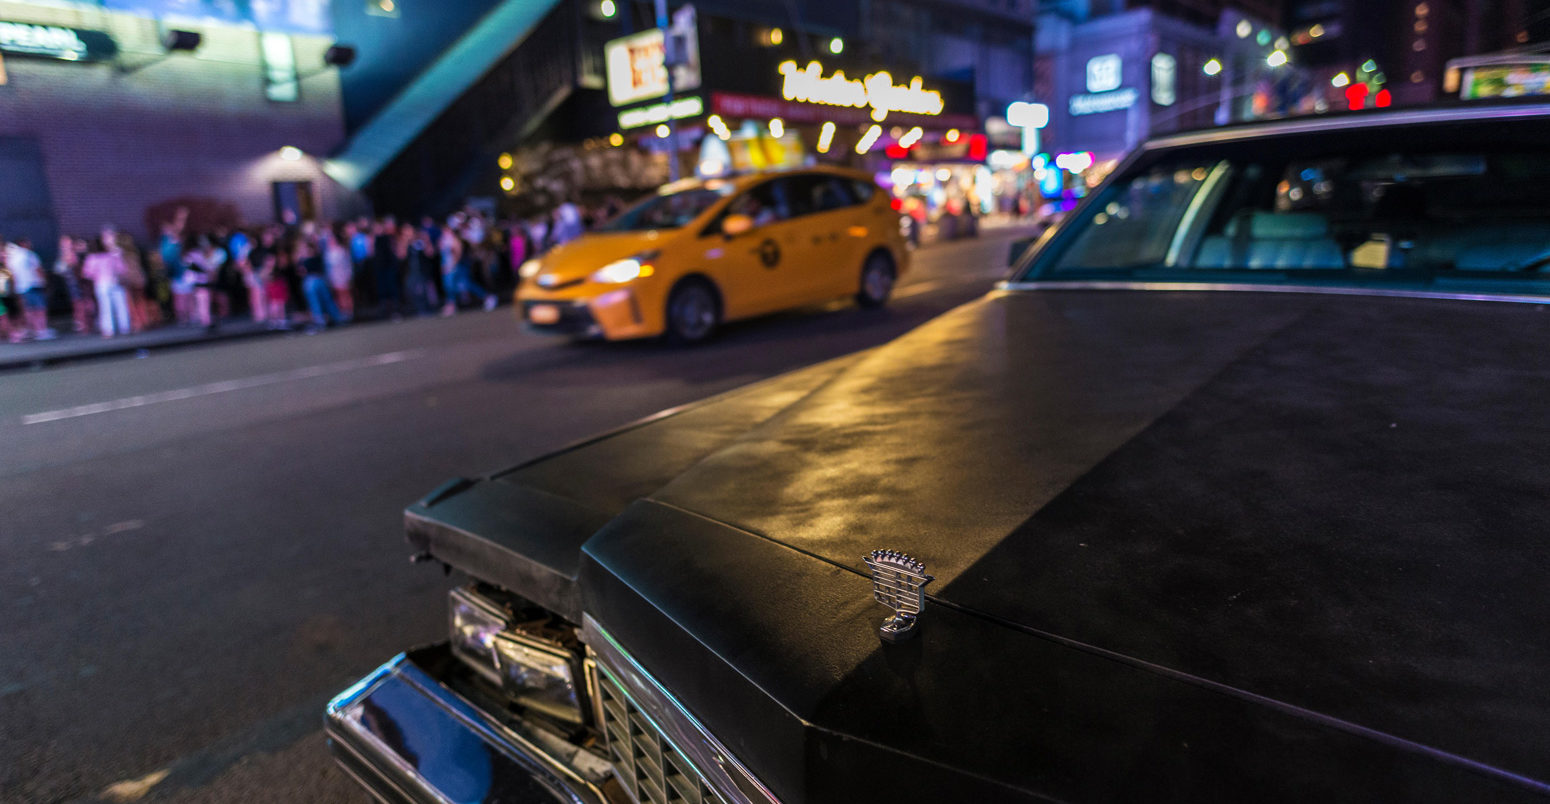 Classic American car parked at night on Seventh Avenue , New York City, USA. 30 July 2018. Credit: Jordi De Rueda Roigé / Alamy Stock Photo